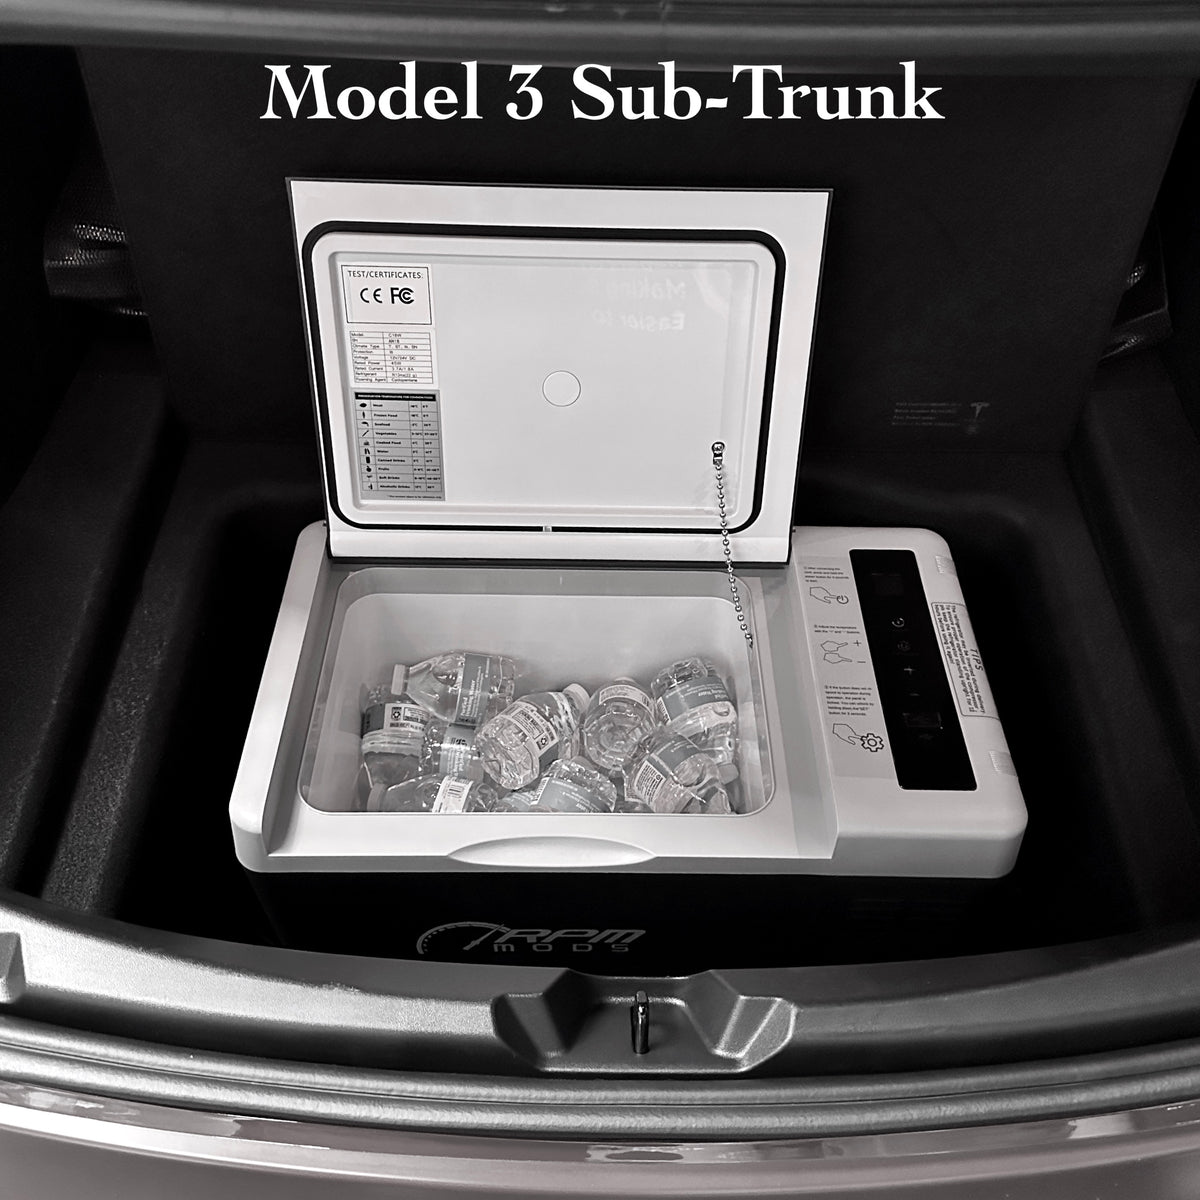 2023 Tesla Model Y Sub Trunk Refrigerator & Freezer Upgrade